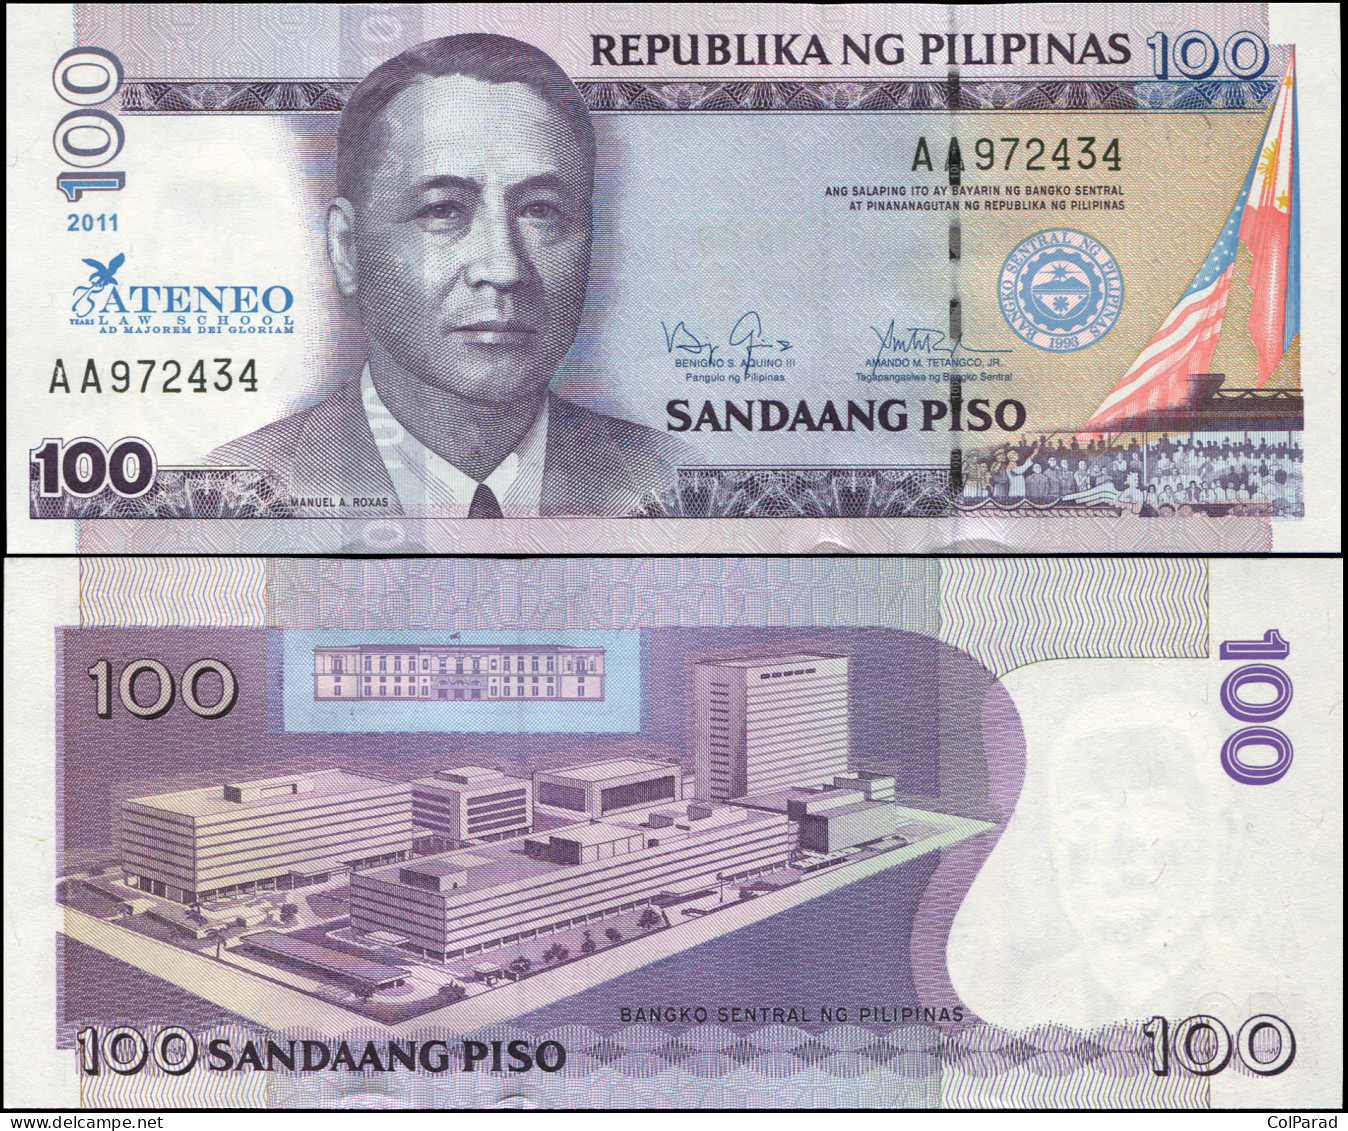 PHILIPPINES 100 PISO - 2011 - Paper Unc - P.212a Banknote - ATENEO Law School - Philippines